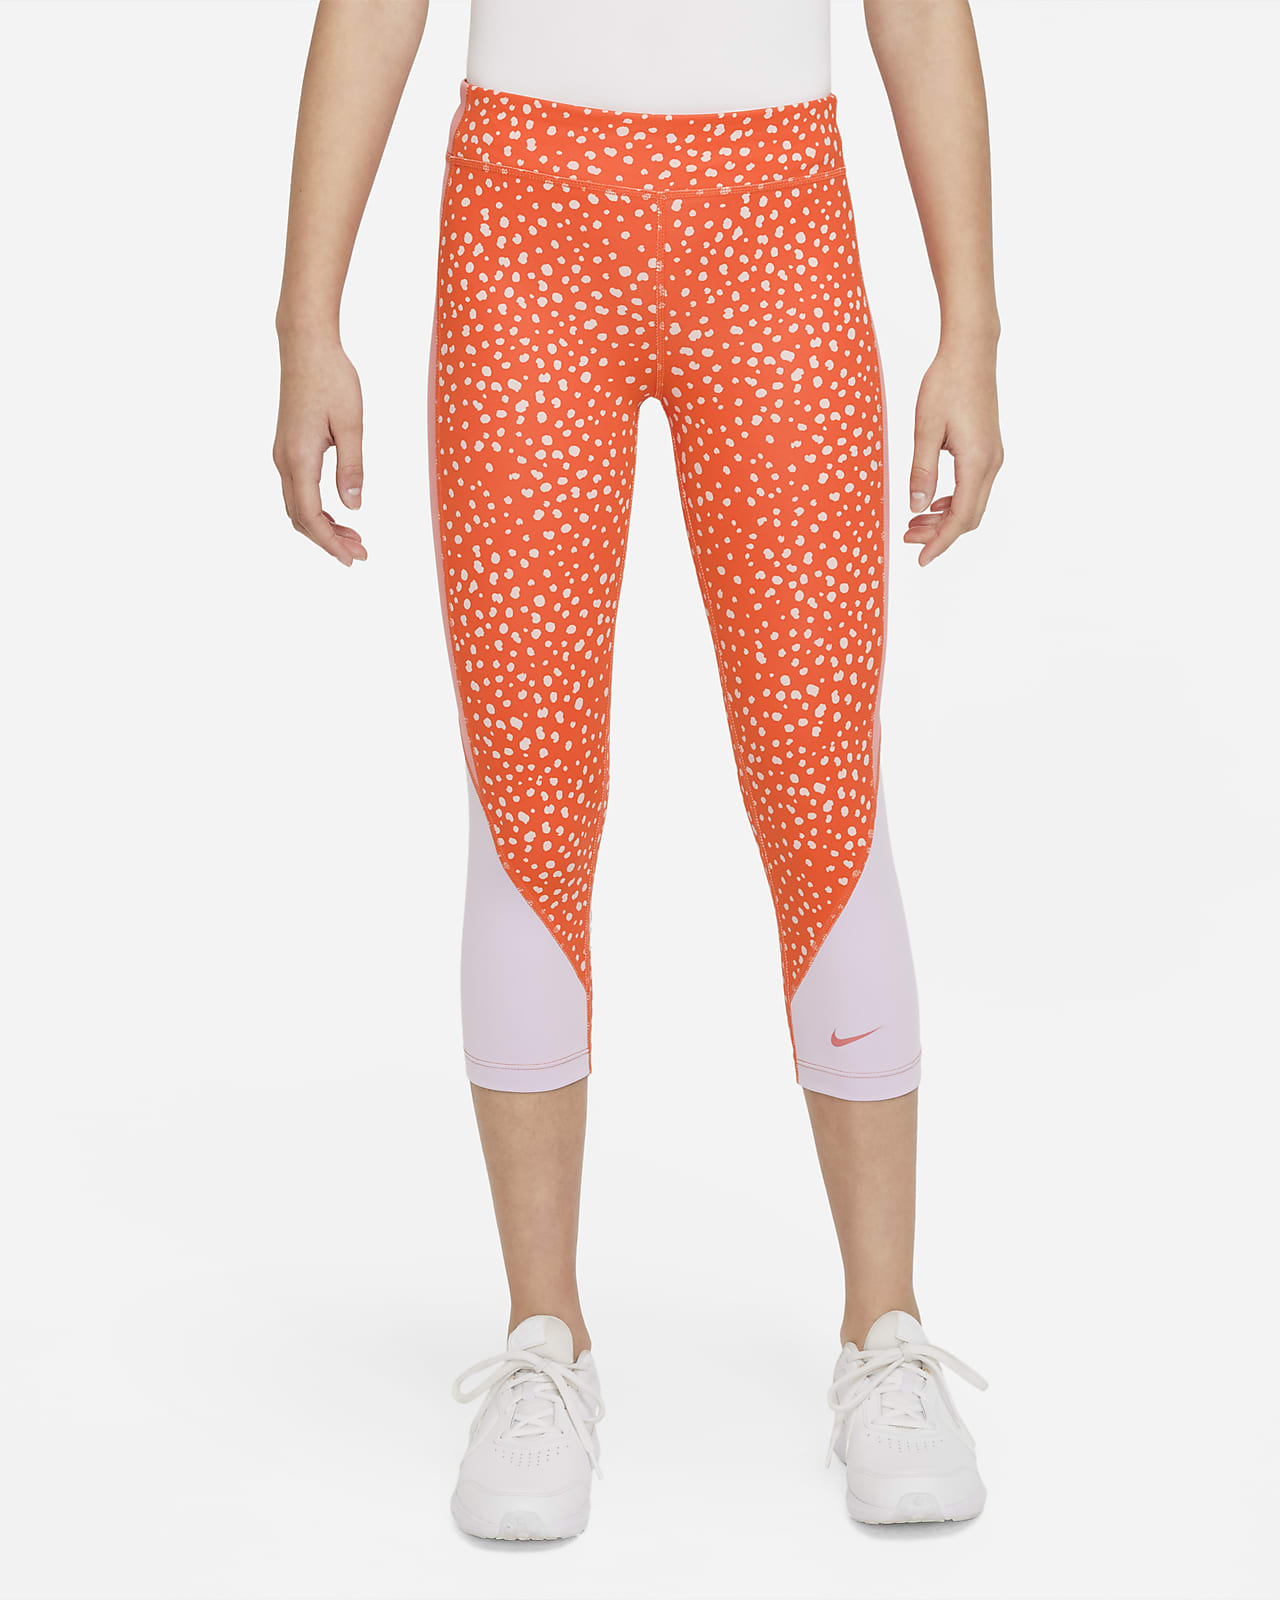 Nike Capri Pants for Women in Womens Pants - Walmart.com